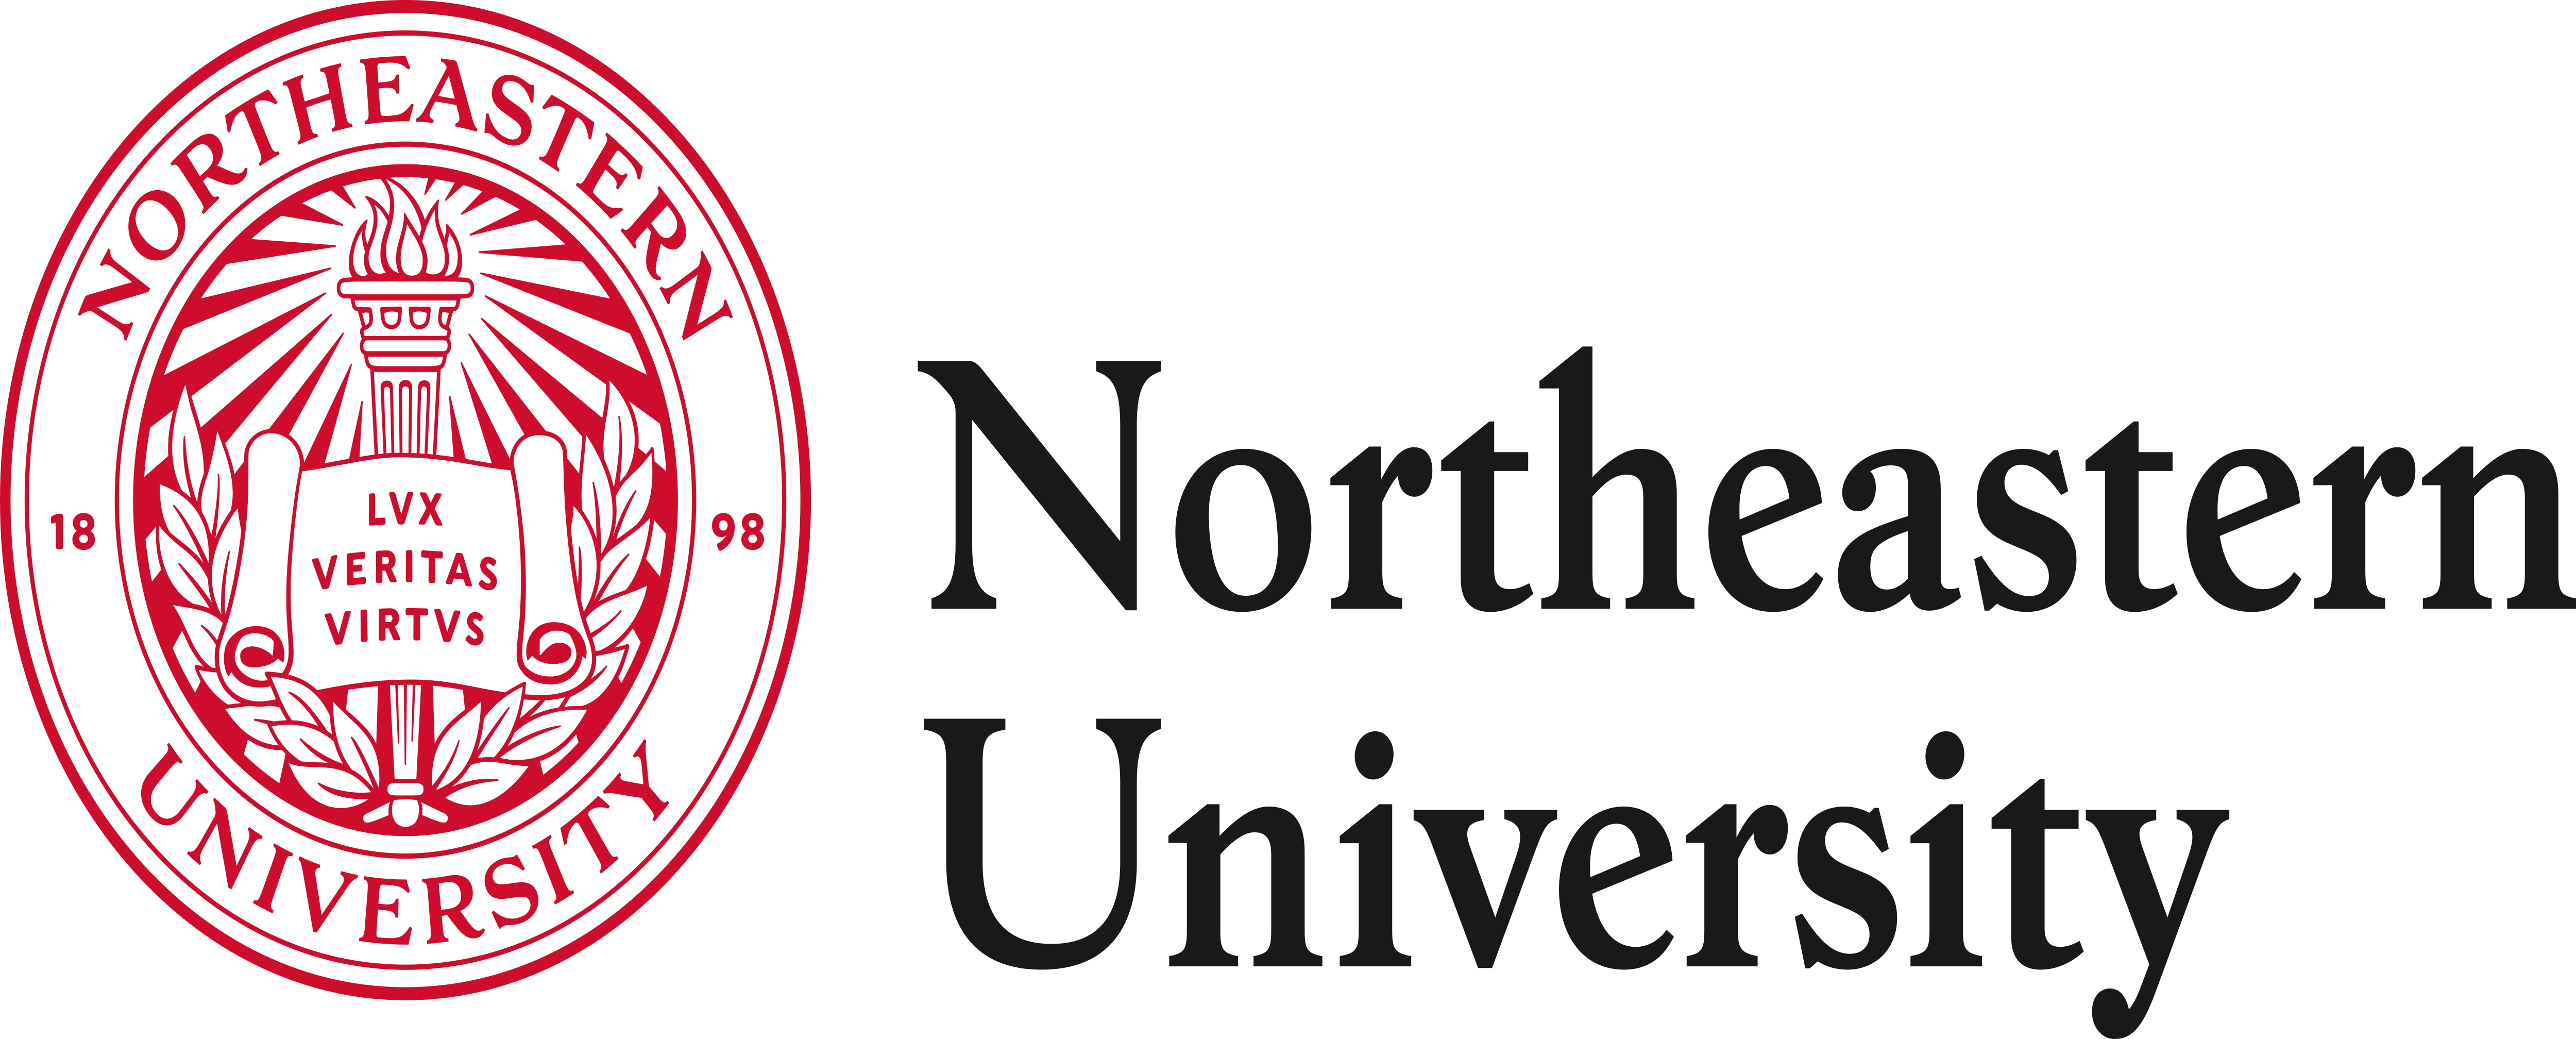 Image result for northeastern university